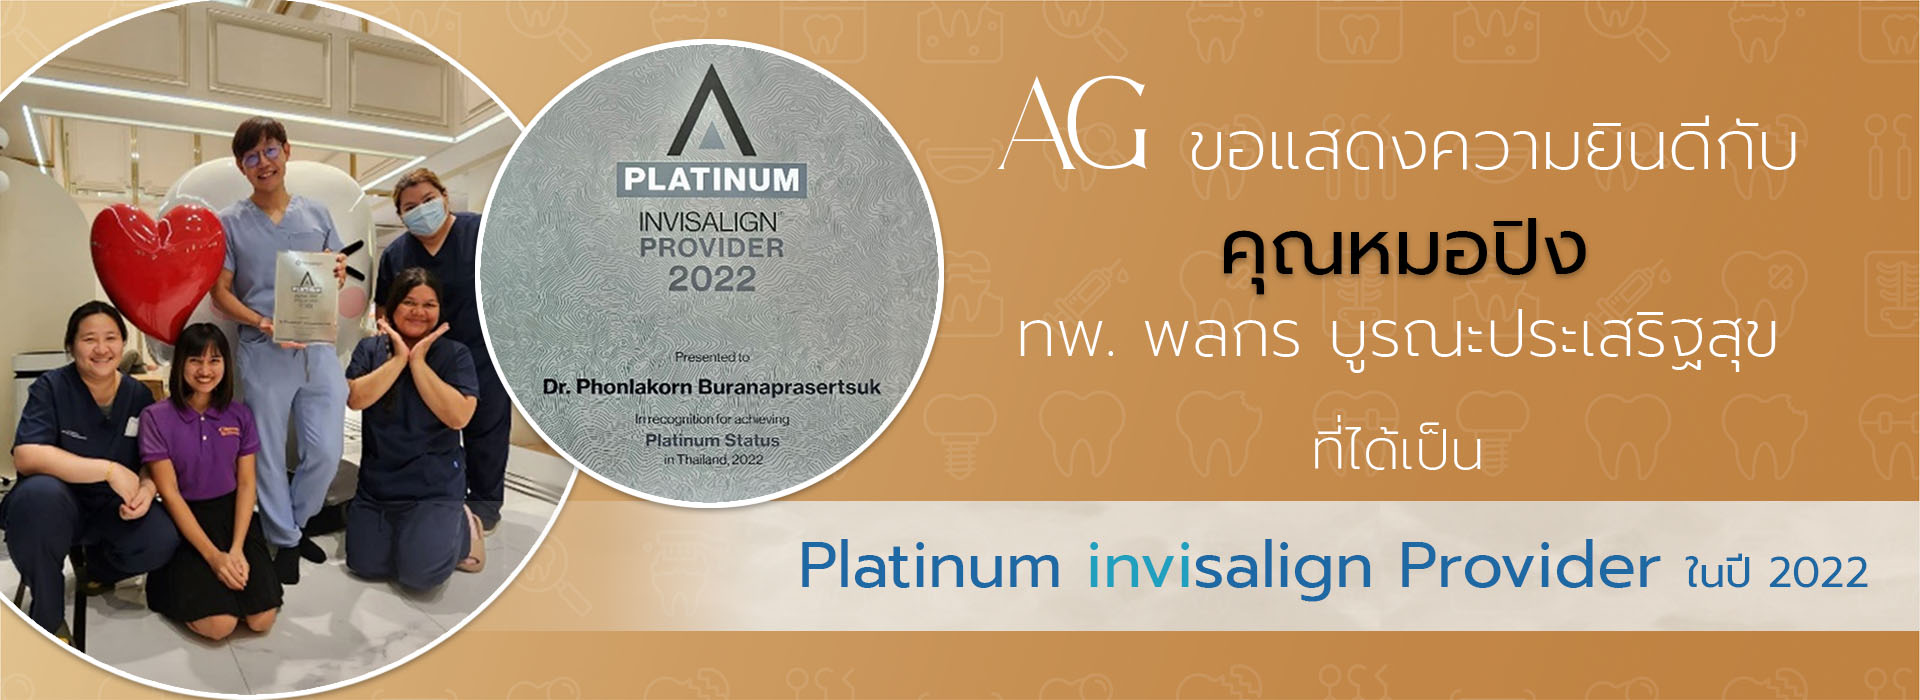 AG Platinum Invisalign Provider 2022 - 2